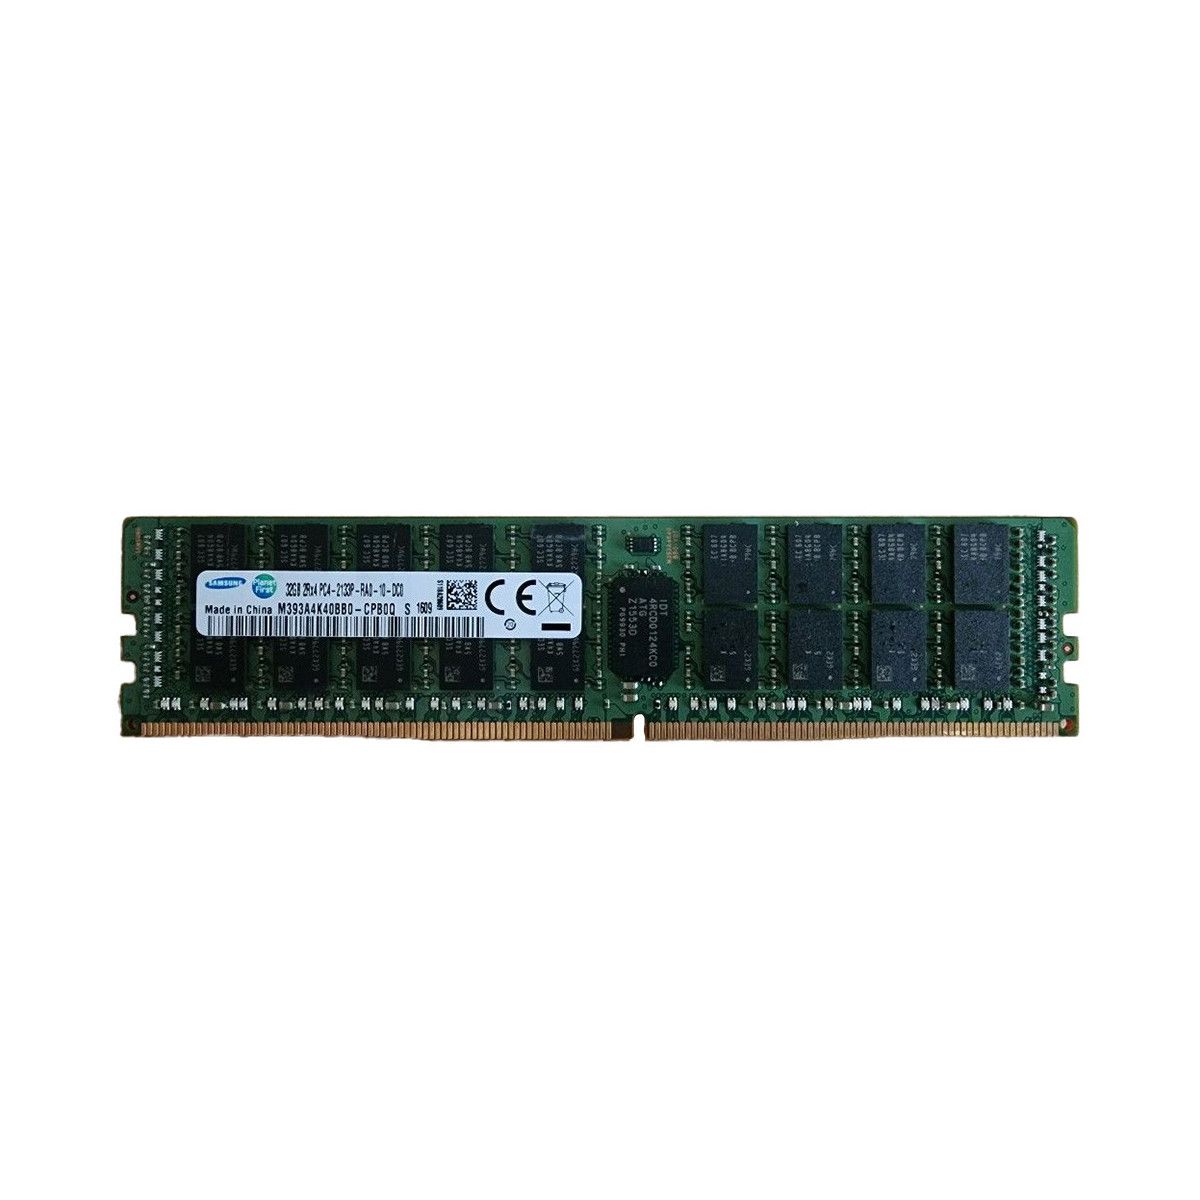 753222-B21-MS - Memstar 1x 32GB DDR4-2133 RDIMM PC4-17000P-R - Mem-Star Compatible OEM Mémoire 1 - Memstar 